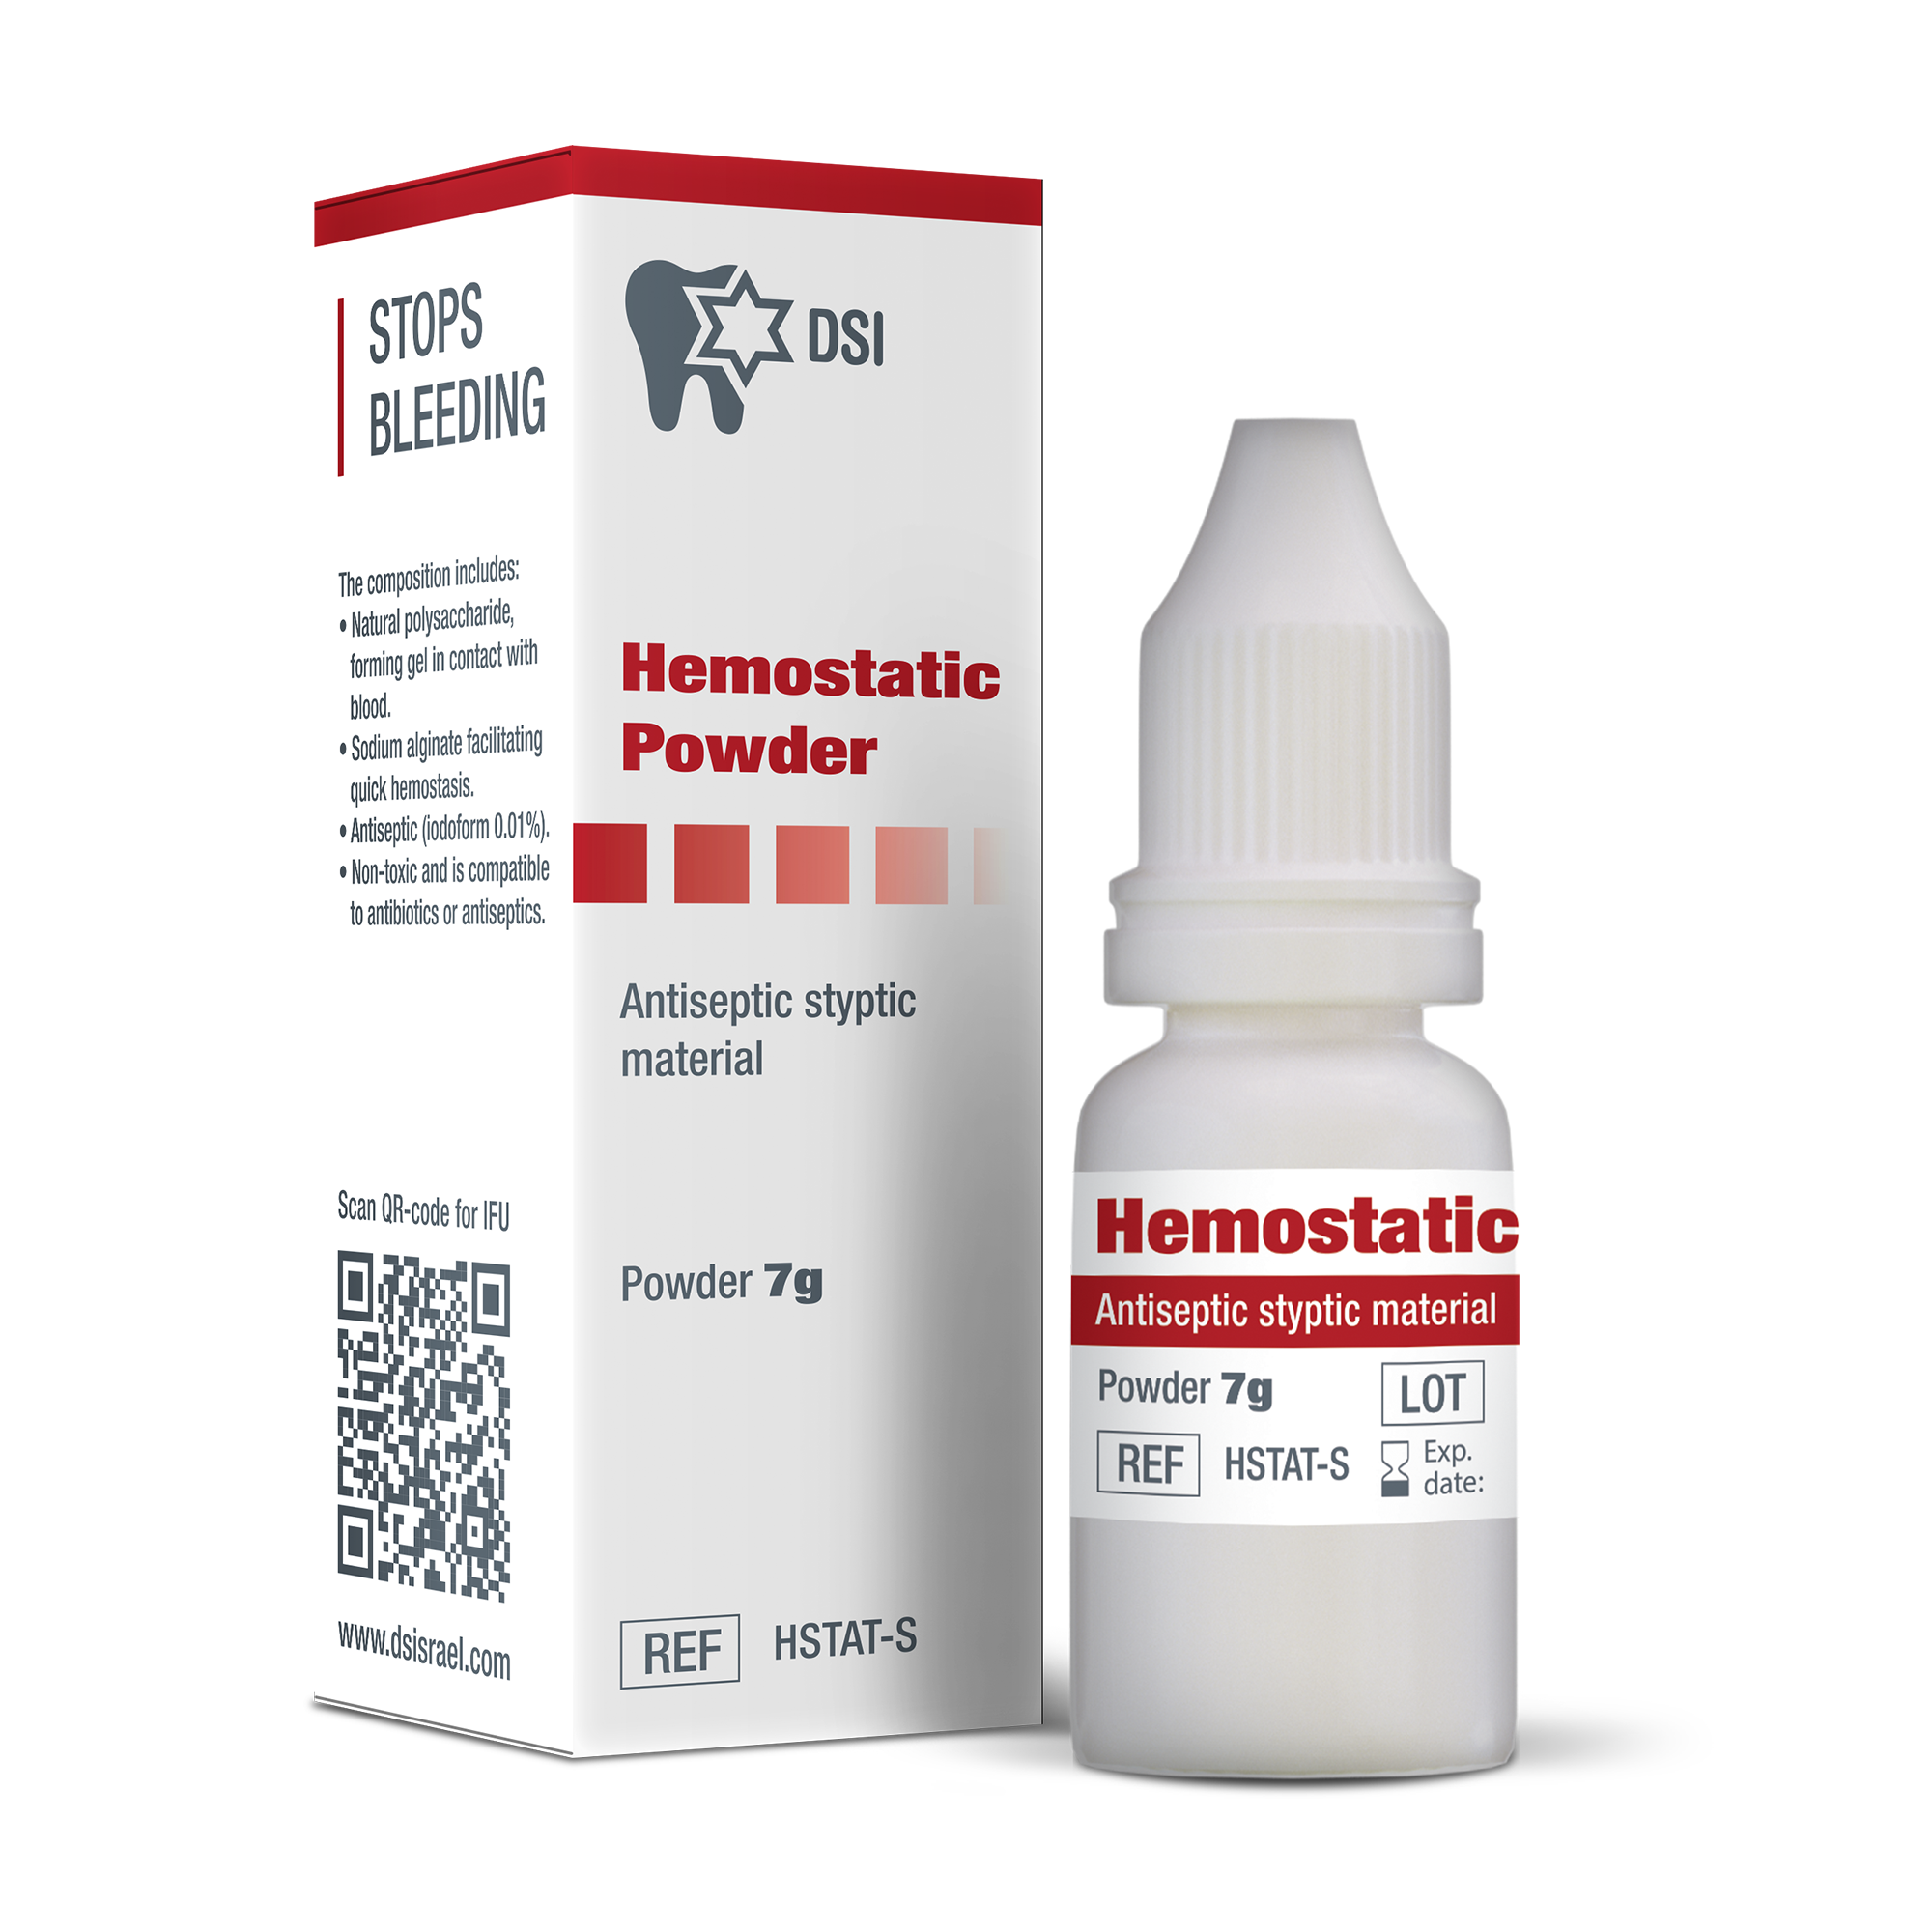 DSI Hemostatic Powder Antiseptic Styptic Material Stops Bleeding 7g